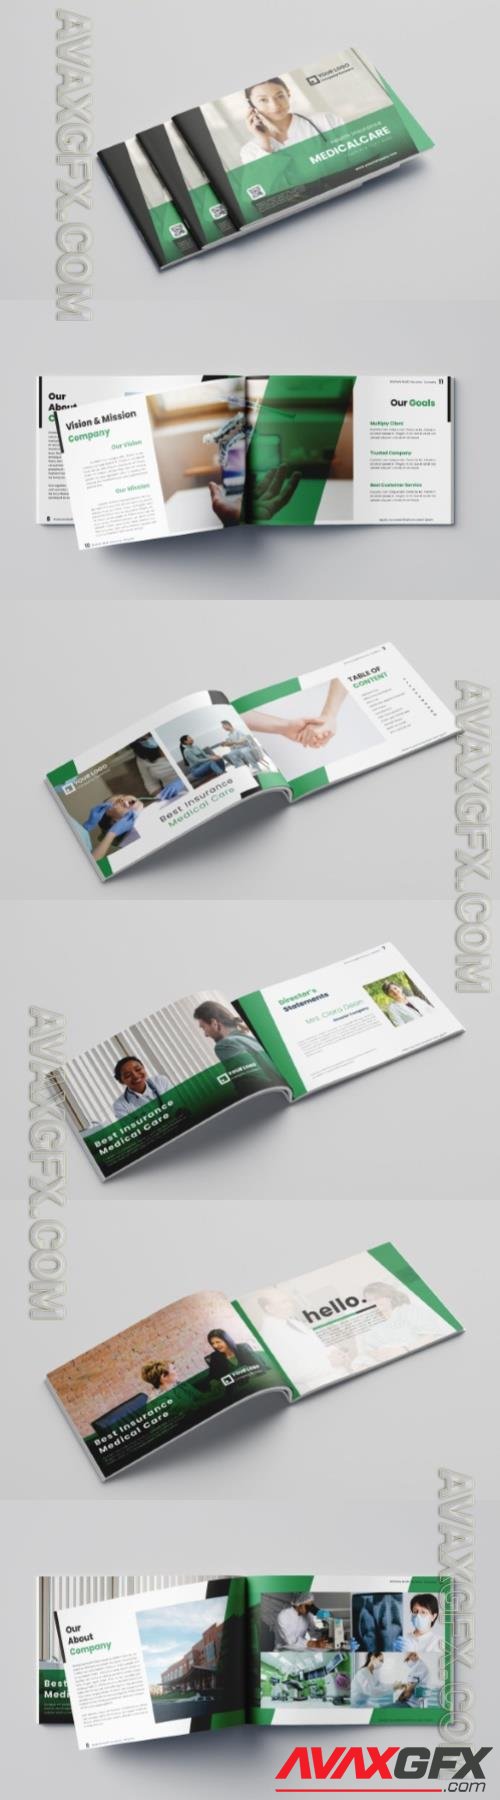 Health Insurance Brochure Vol.1 8R7PUQB